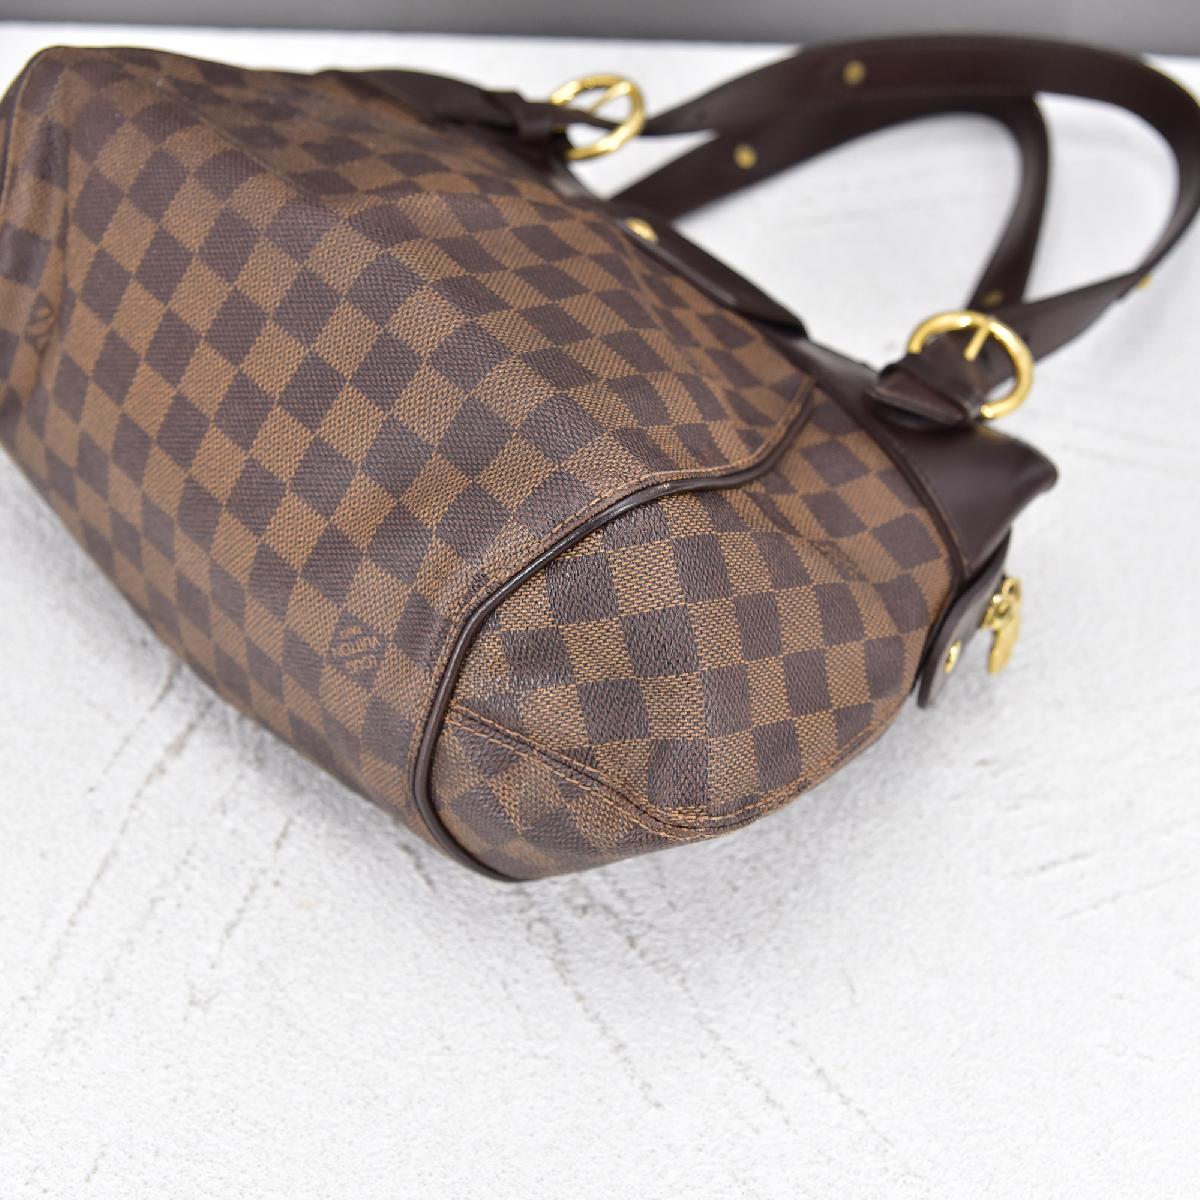 Louis Vuitton pre-owned Sistina PM shoulder bag